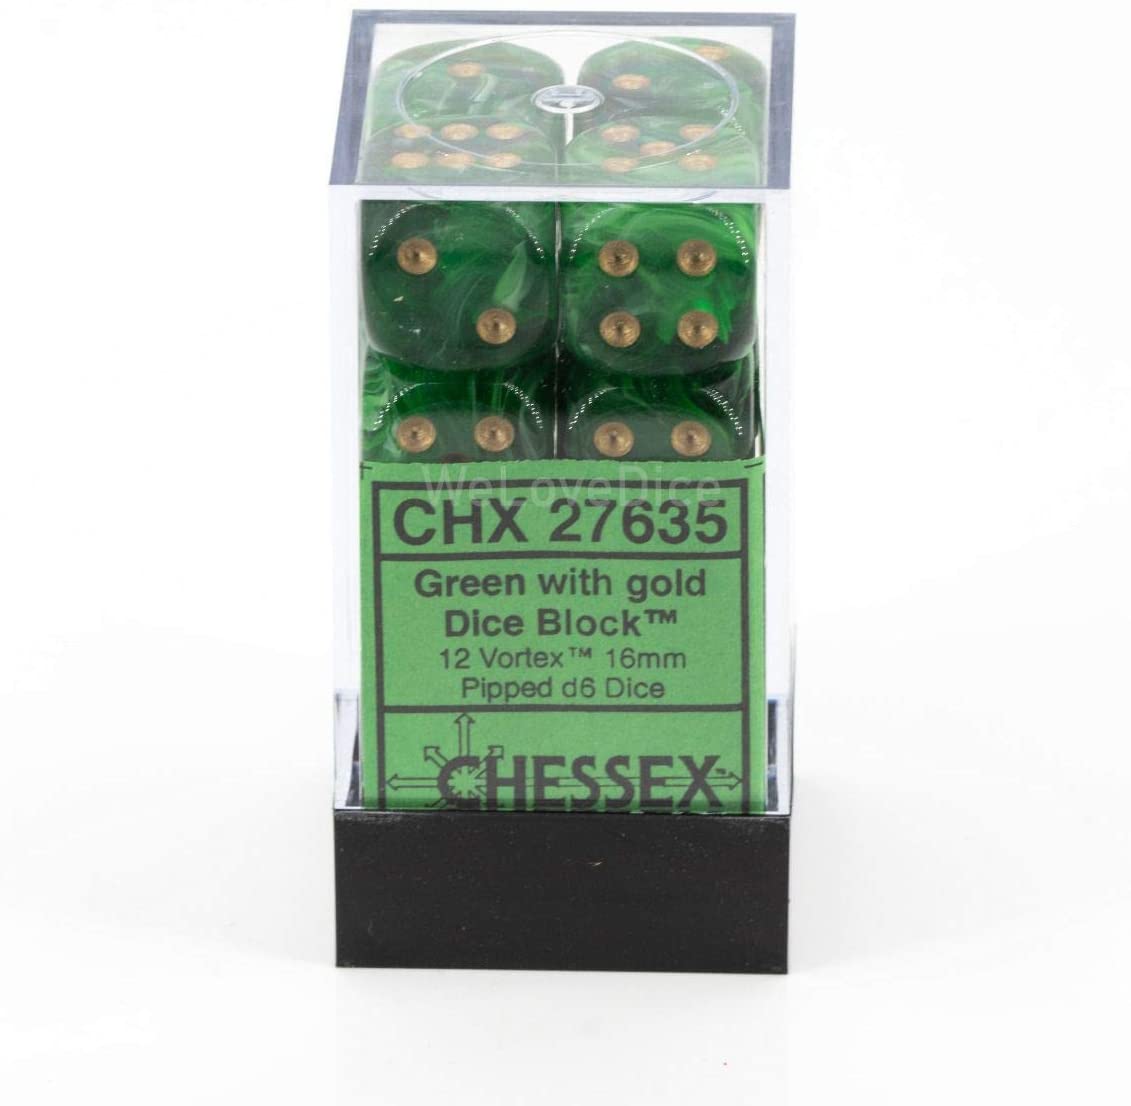 Chessex Dice: D6 Block 16mm - Vortex - Green with Gold (CHX 27635) - Gamescape